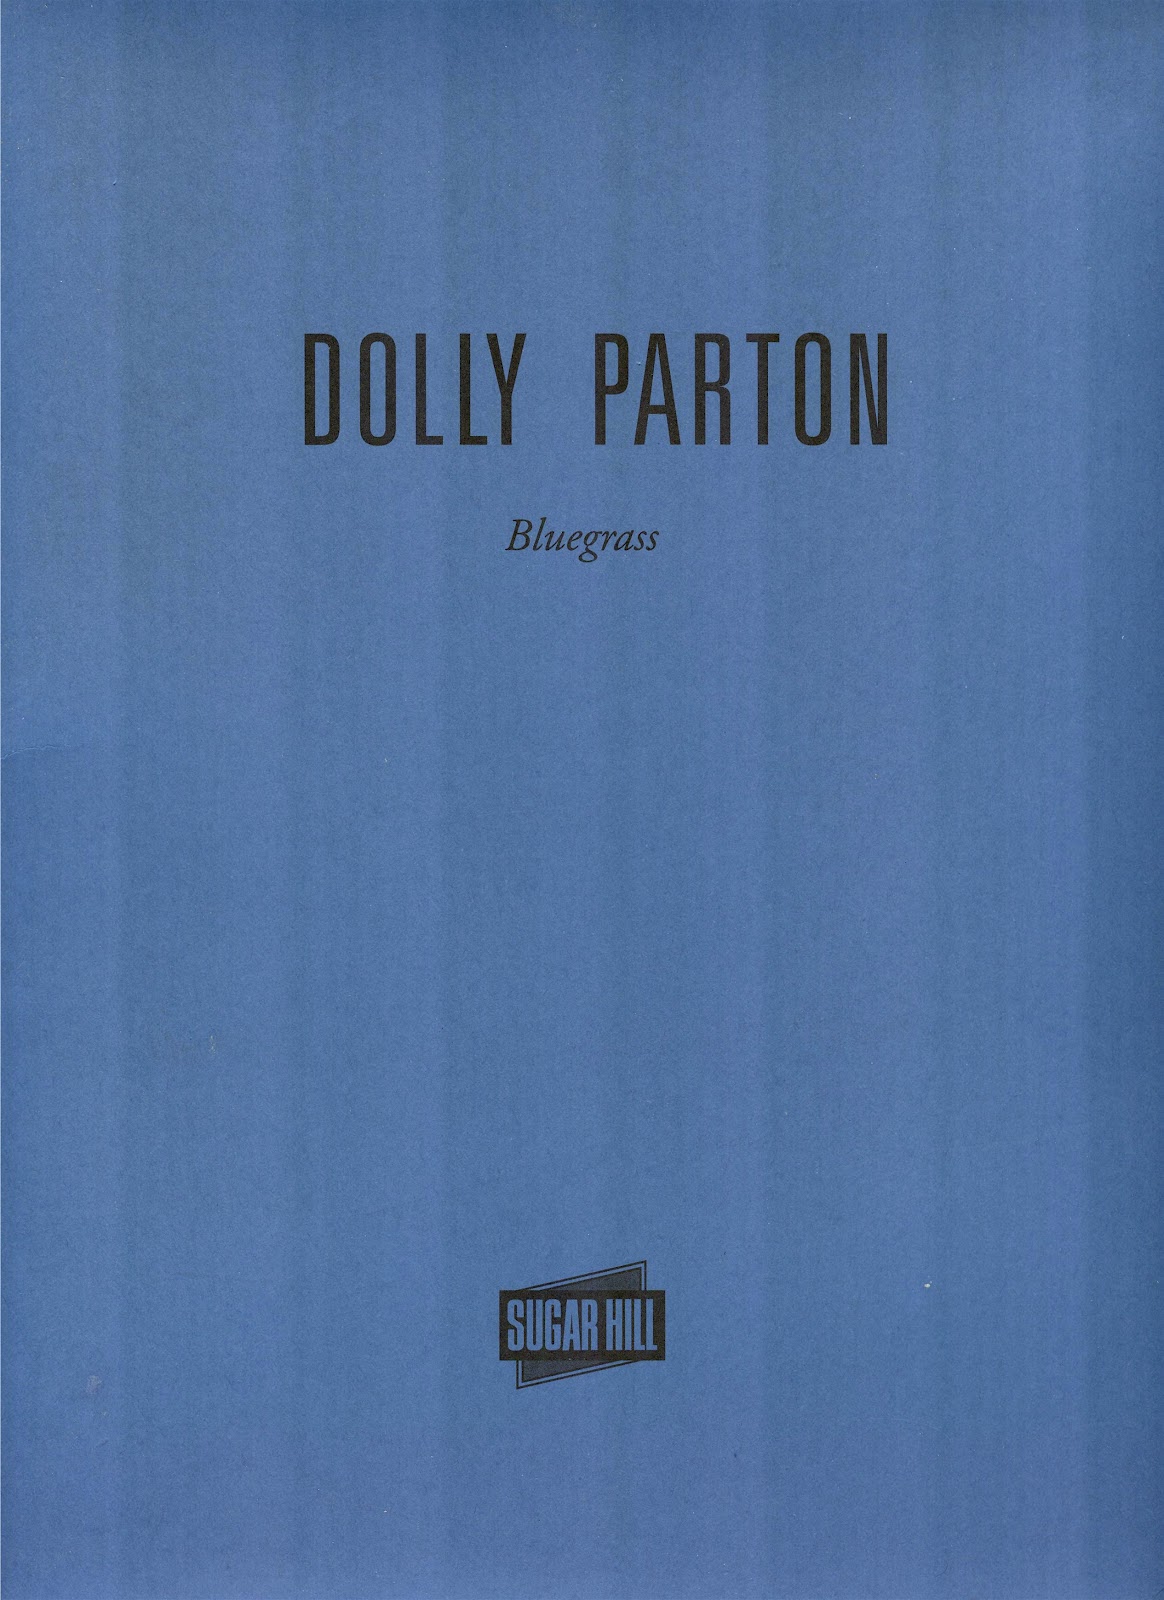 Lansure's Music Paraphernalia: DOLLY PARTON | Press Kits | Memorabilia